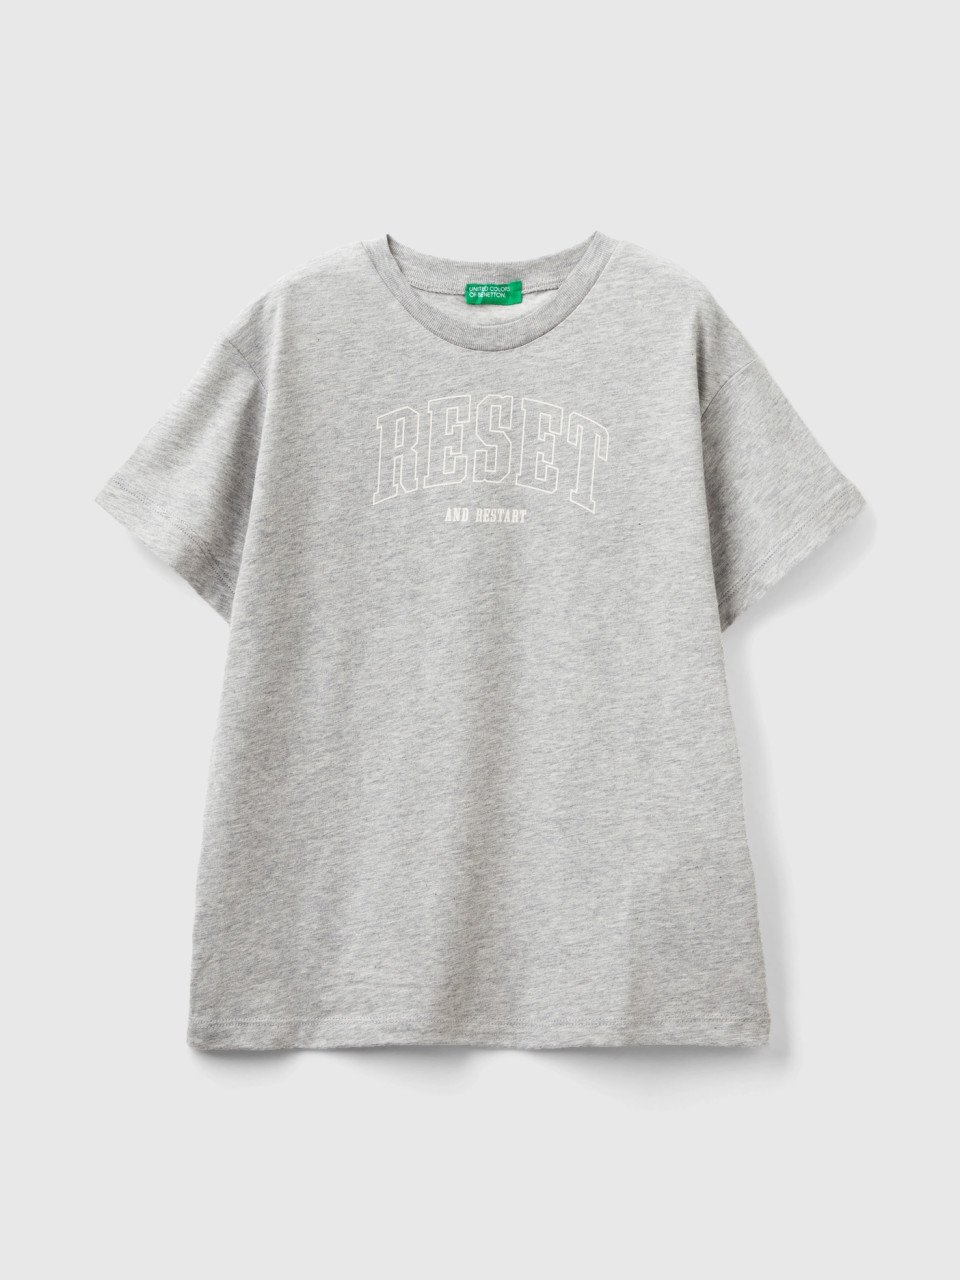 Benetton, T-shirt With Print In Organic Cotton, Light Gray, Kids